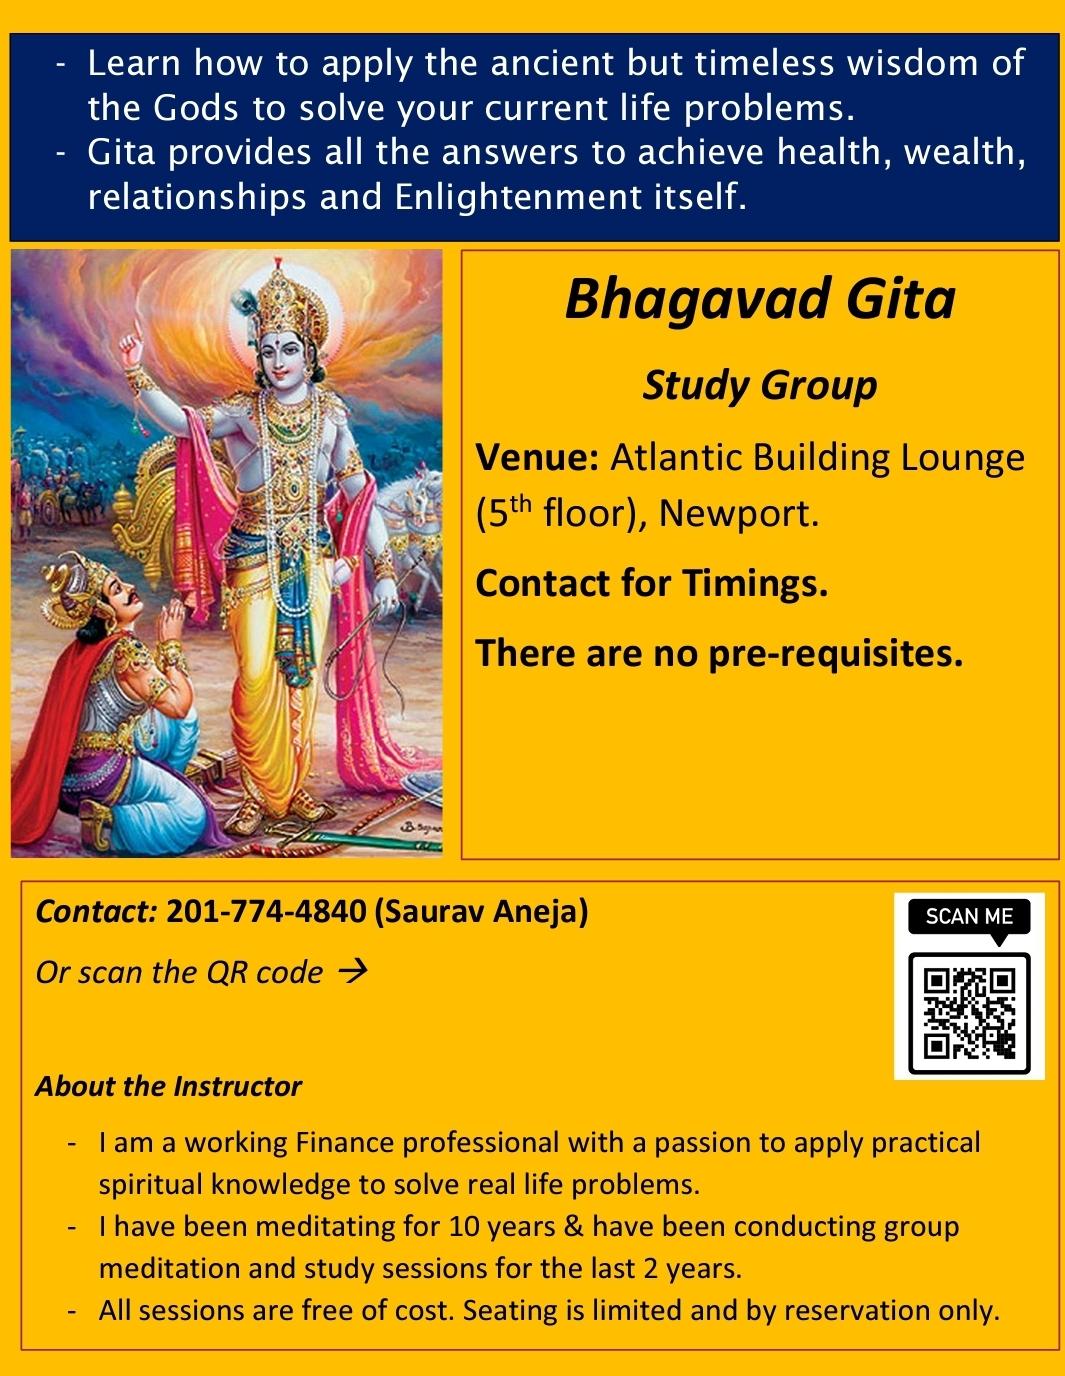 Bhagavad Gita Class (Focus on modern day applications)